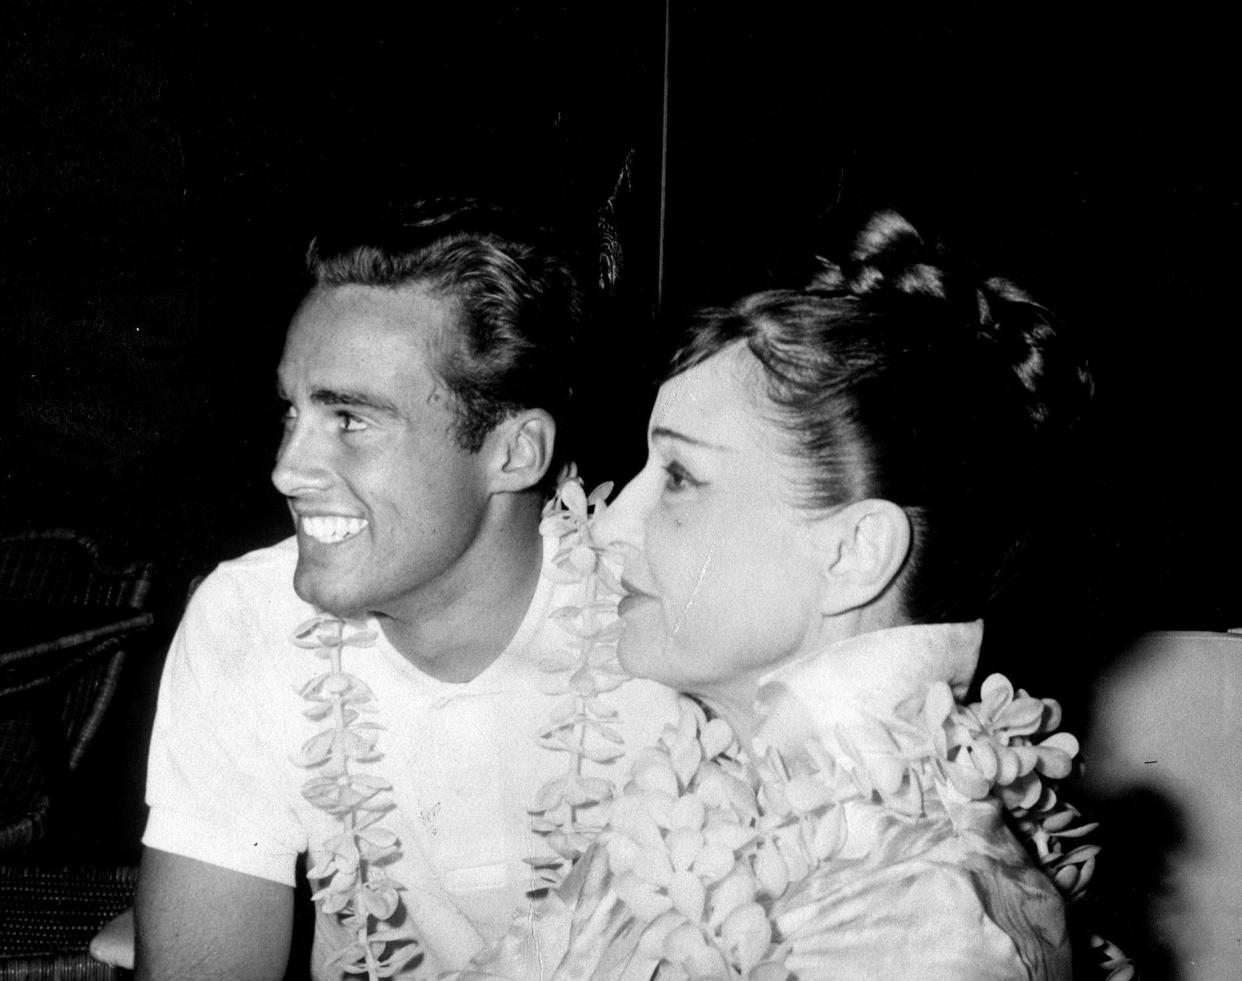 Sean Flynn, son of late Errol Flynn, is shown with his mother Lili Damita around 1961.